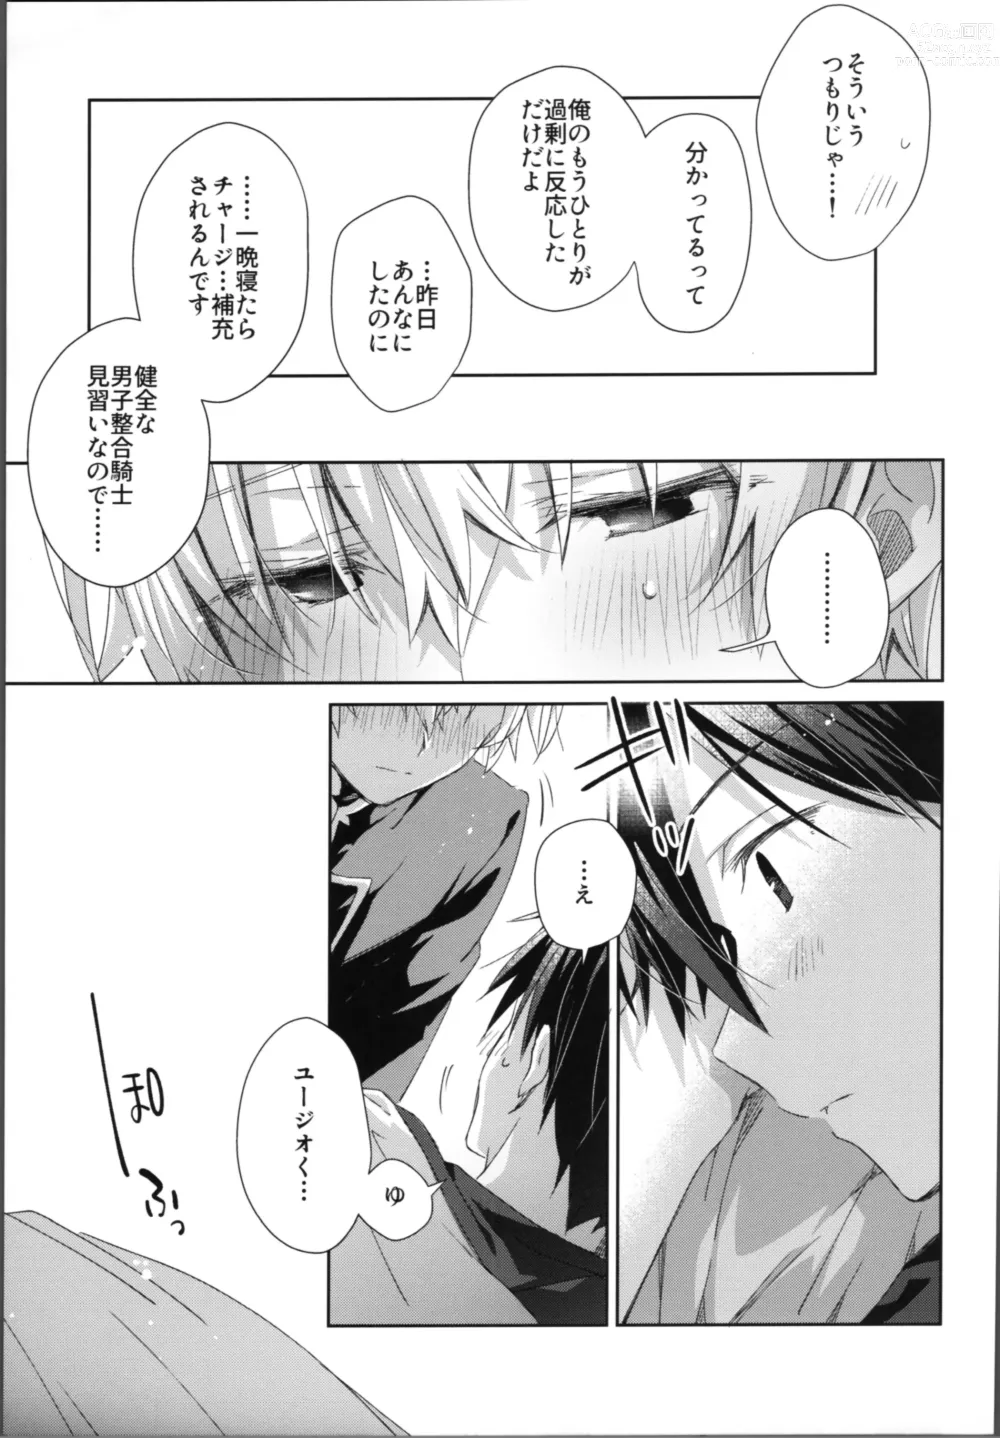 Page 8 of doujinshi Wake up!